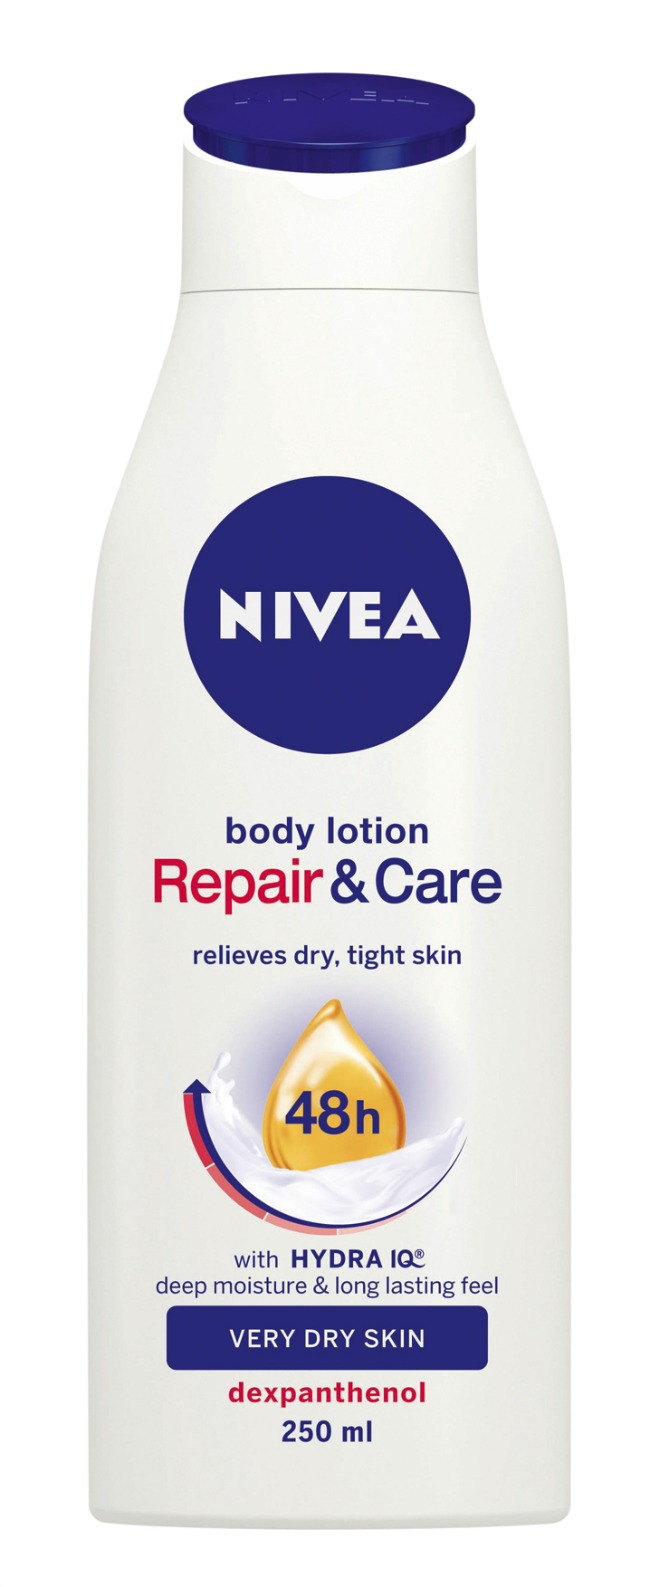 NIVEA Repair Care Body losion Nivea: Izborite se sa suvom kožom tokom zimskog perioda